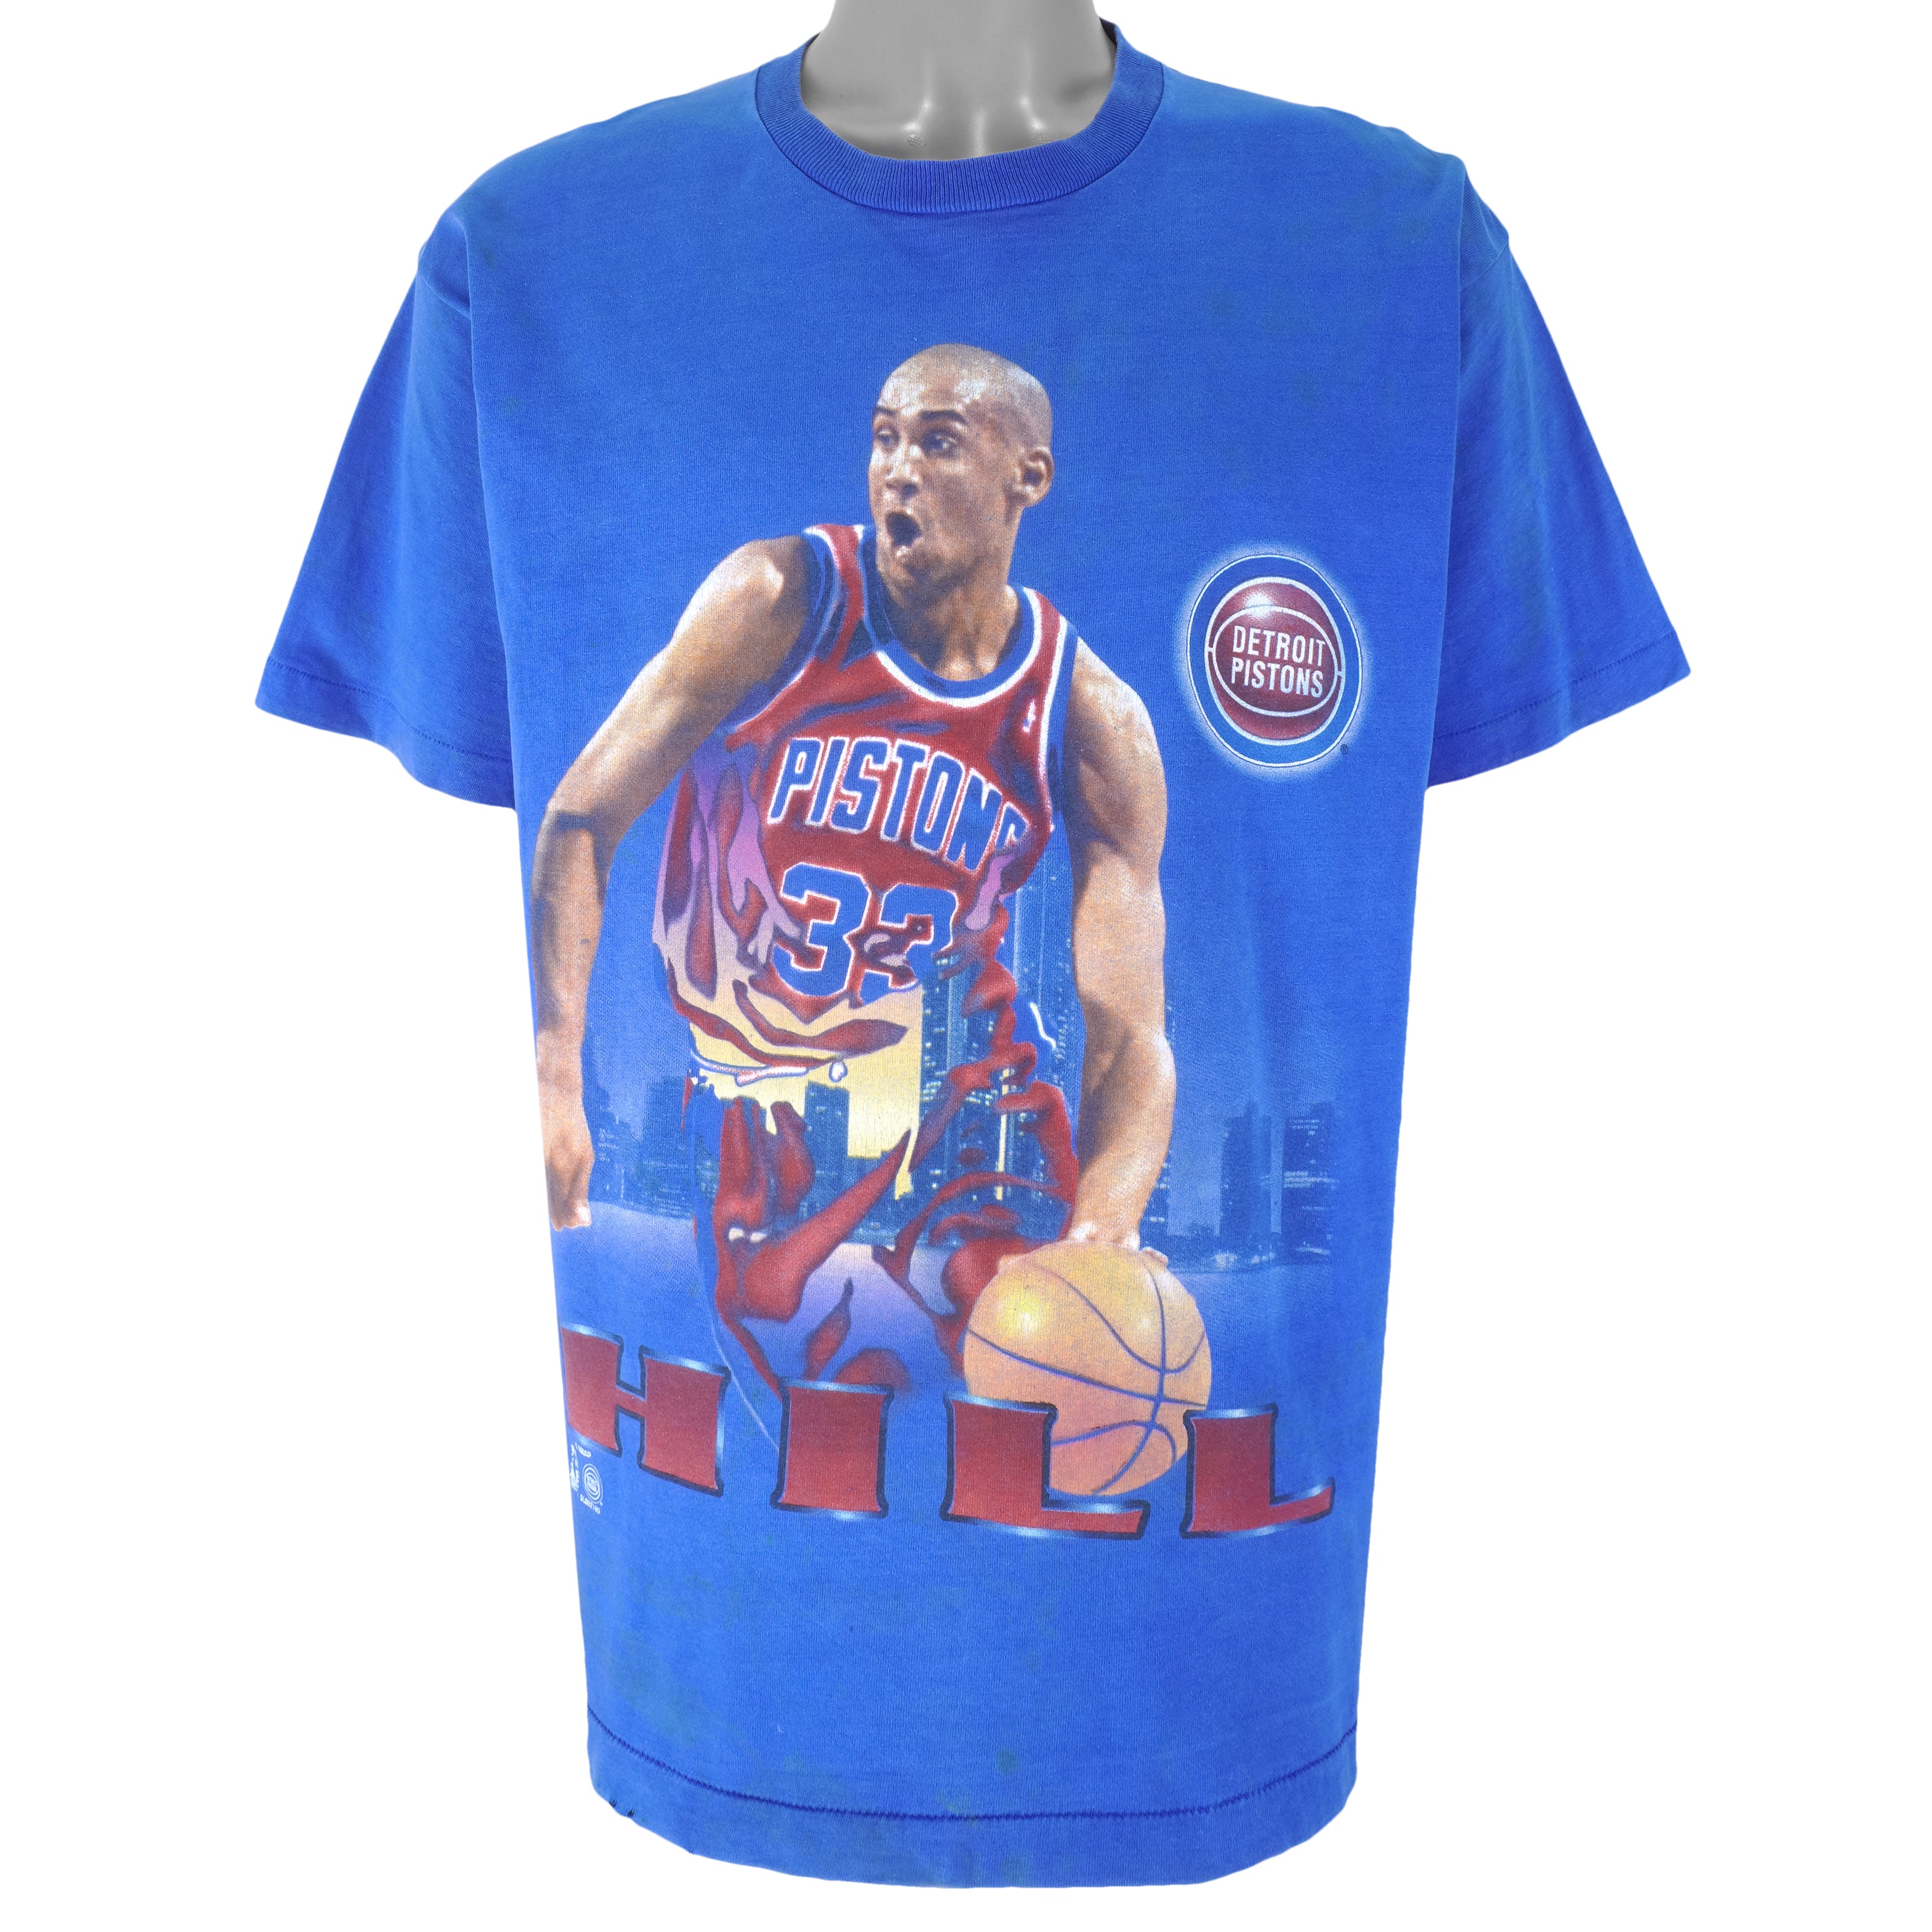 XL) Vintage Salem Detroit Pistons 1990 NBA Championship T Shirt